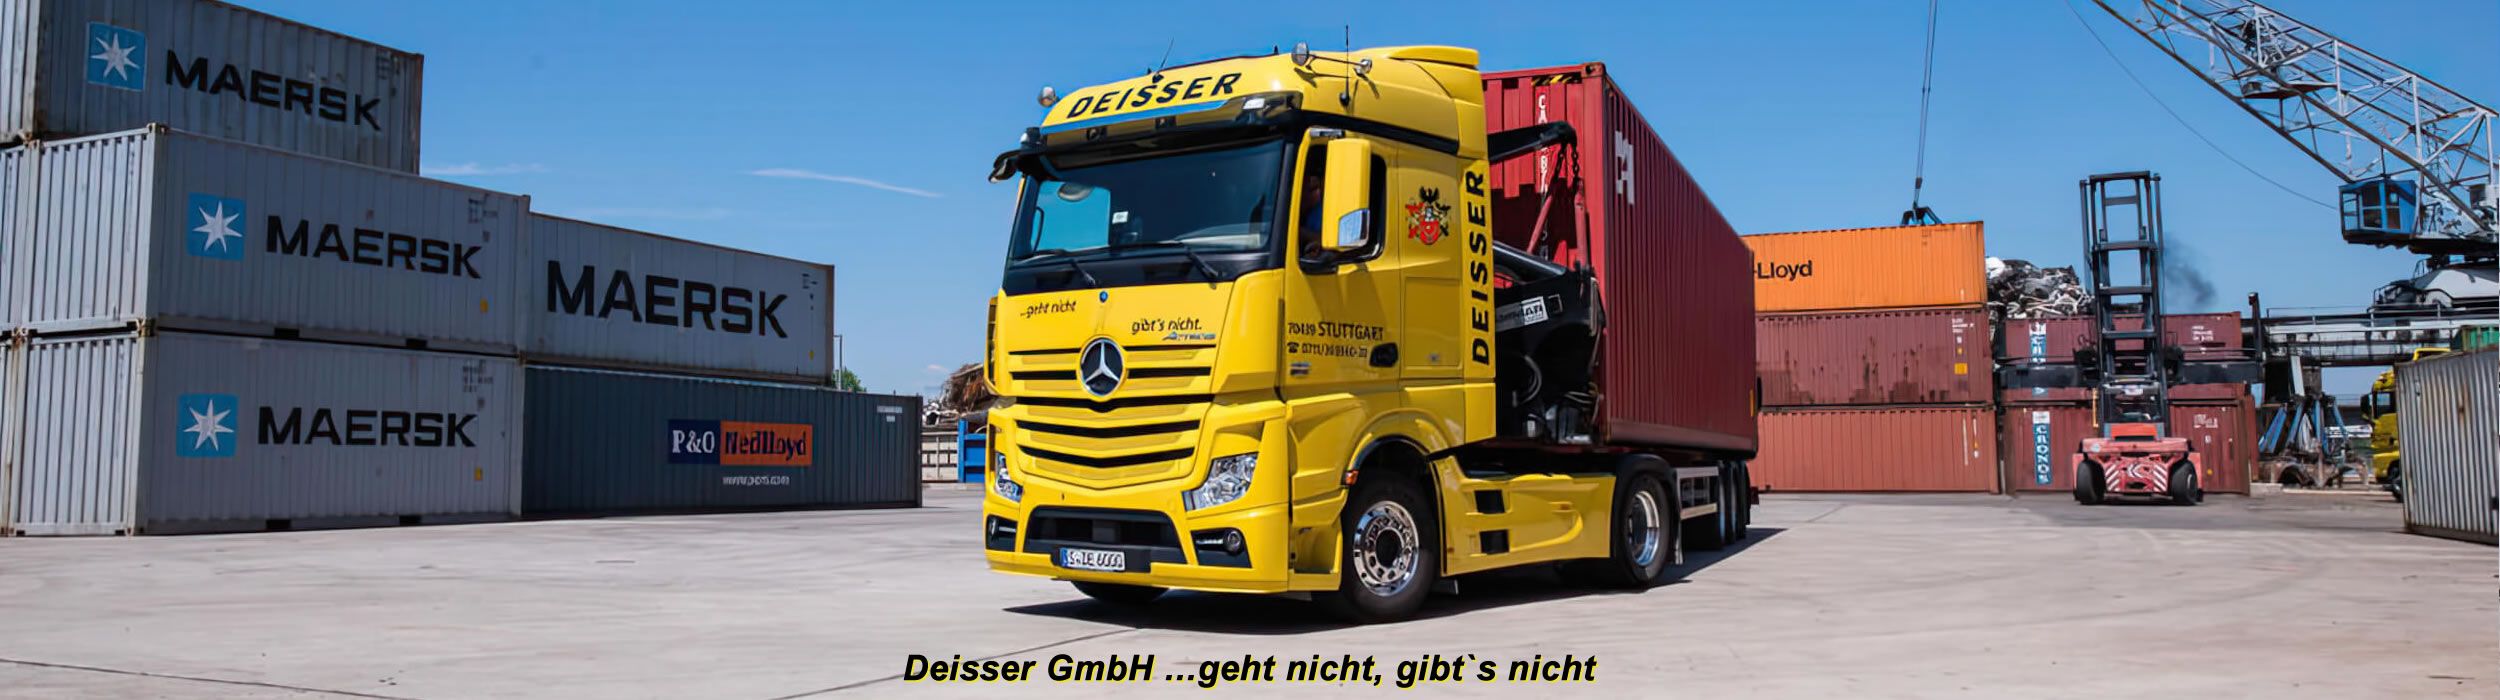 Deisser GmbH / Transportlogistik Seecontainer / News